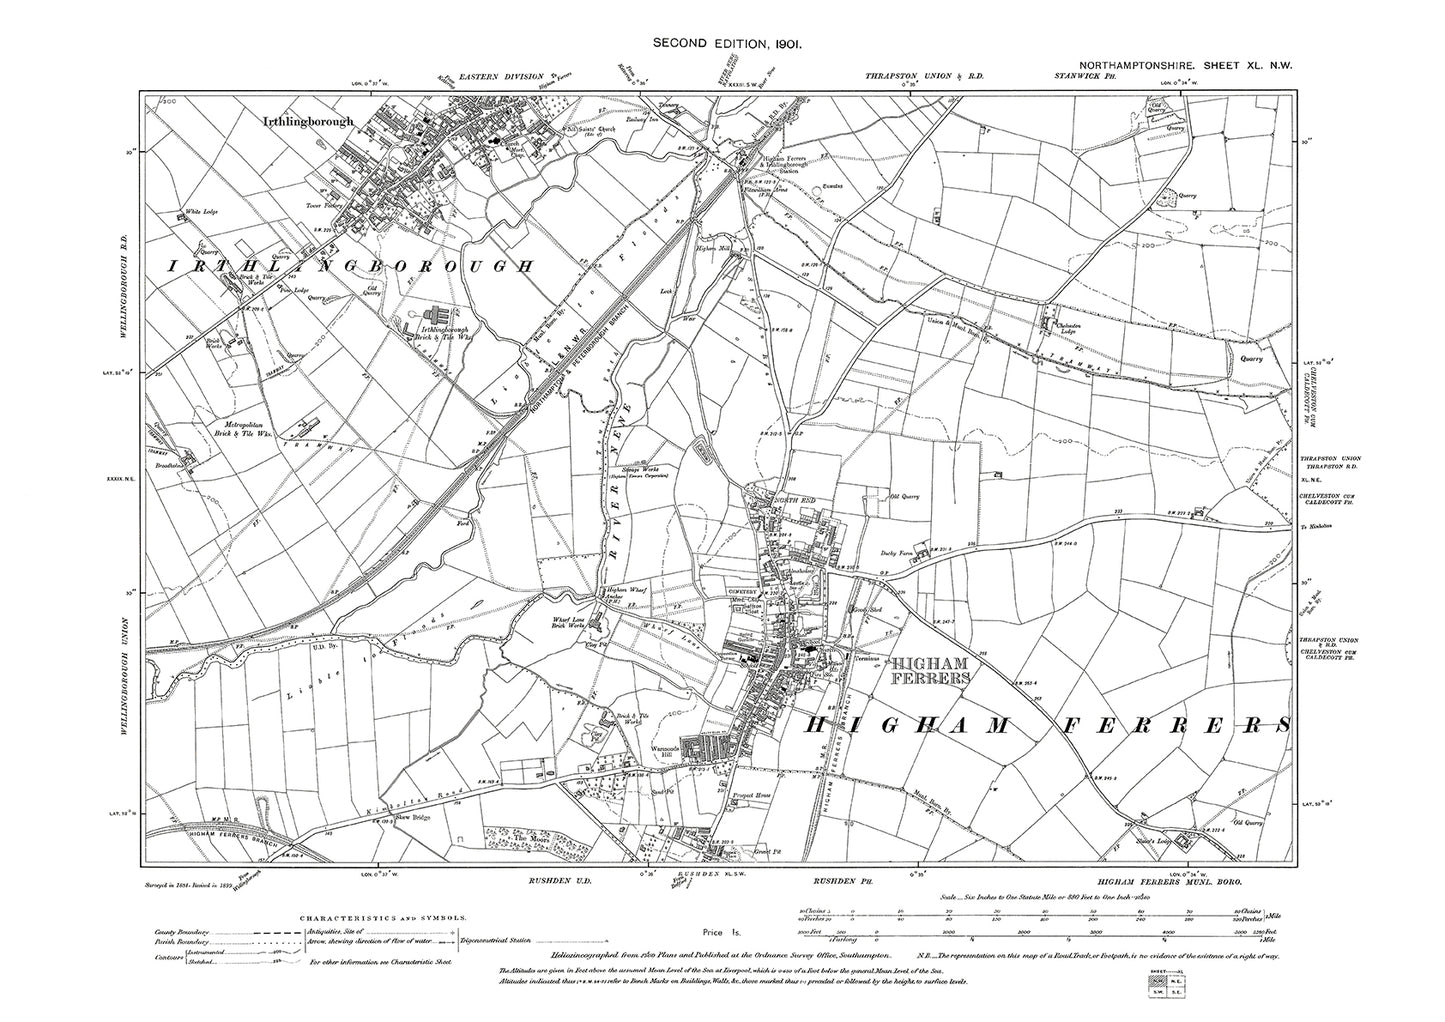 Higham Ferrers, Irthlingborough, Northamptonshire in 1901: 40NW